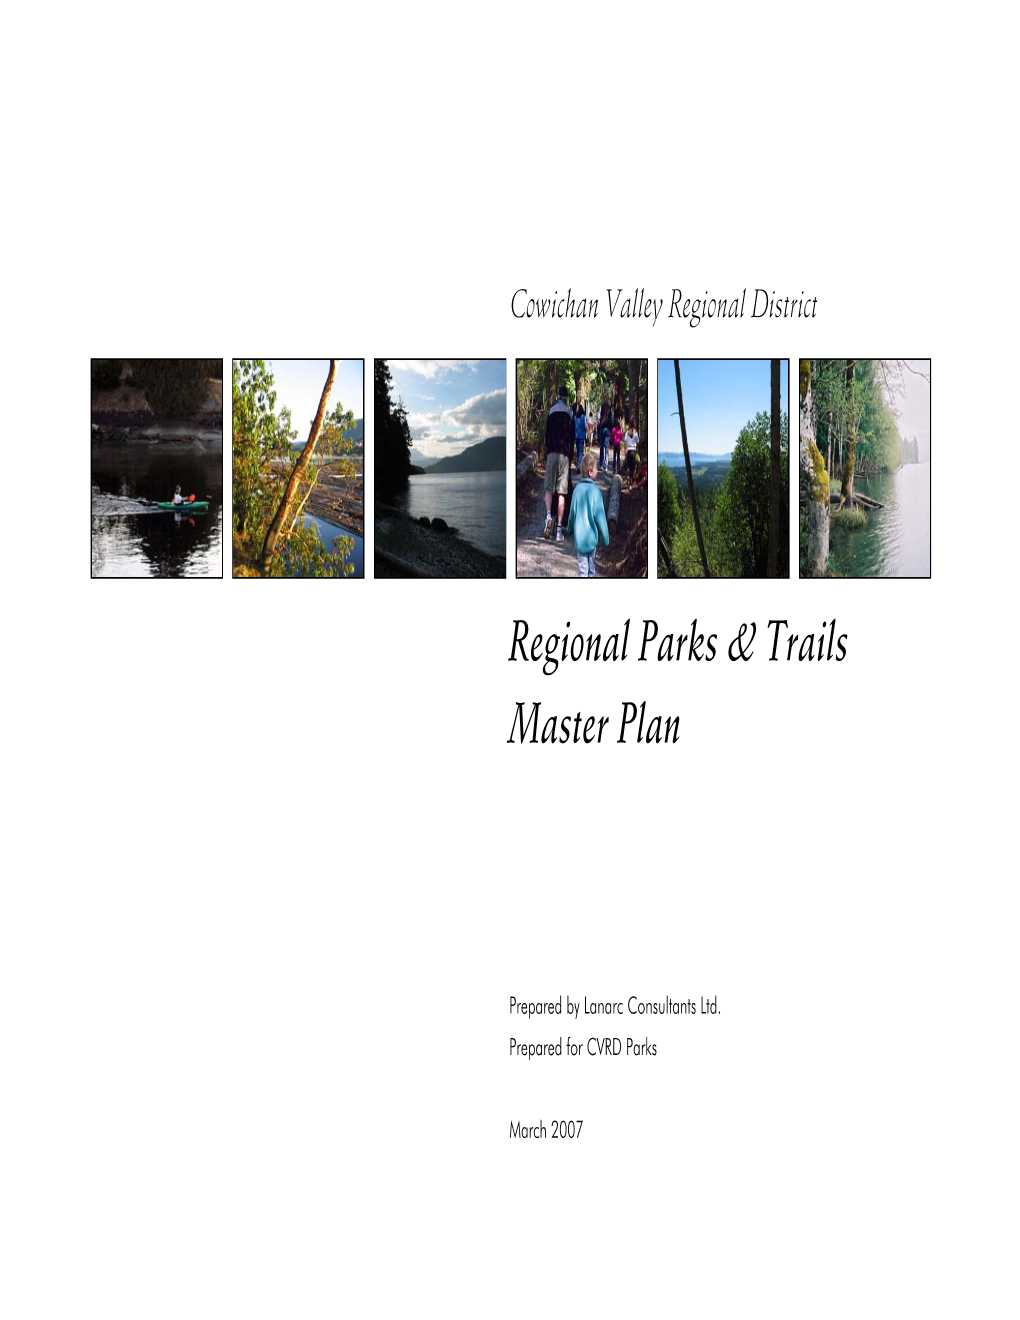 Regional Parks & Trails Master Plan